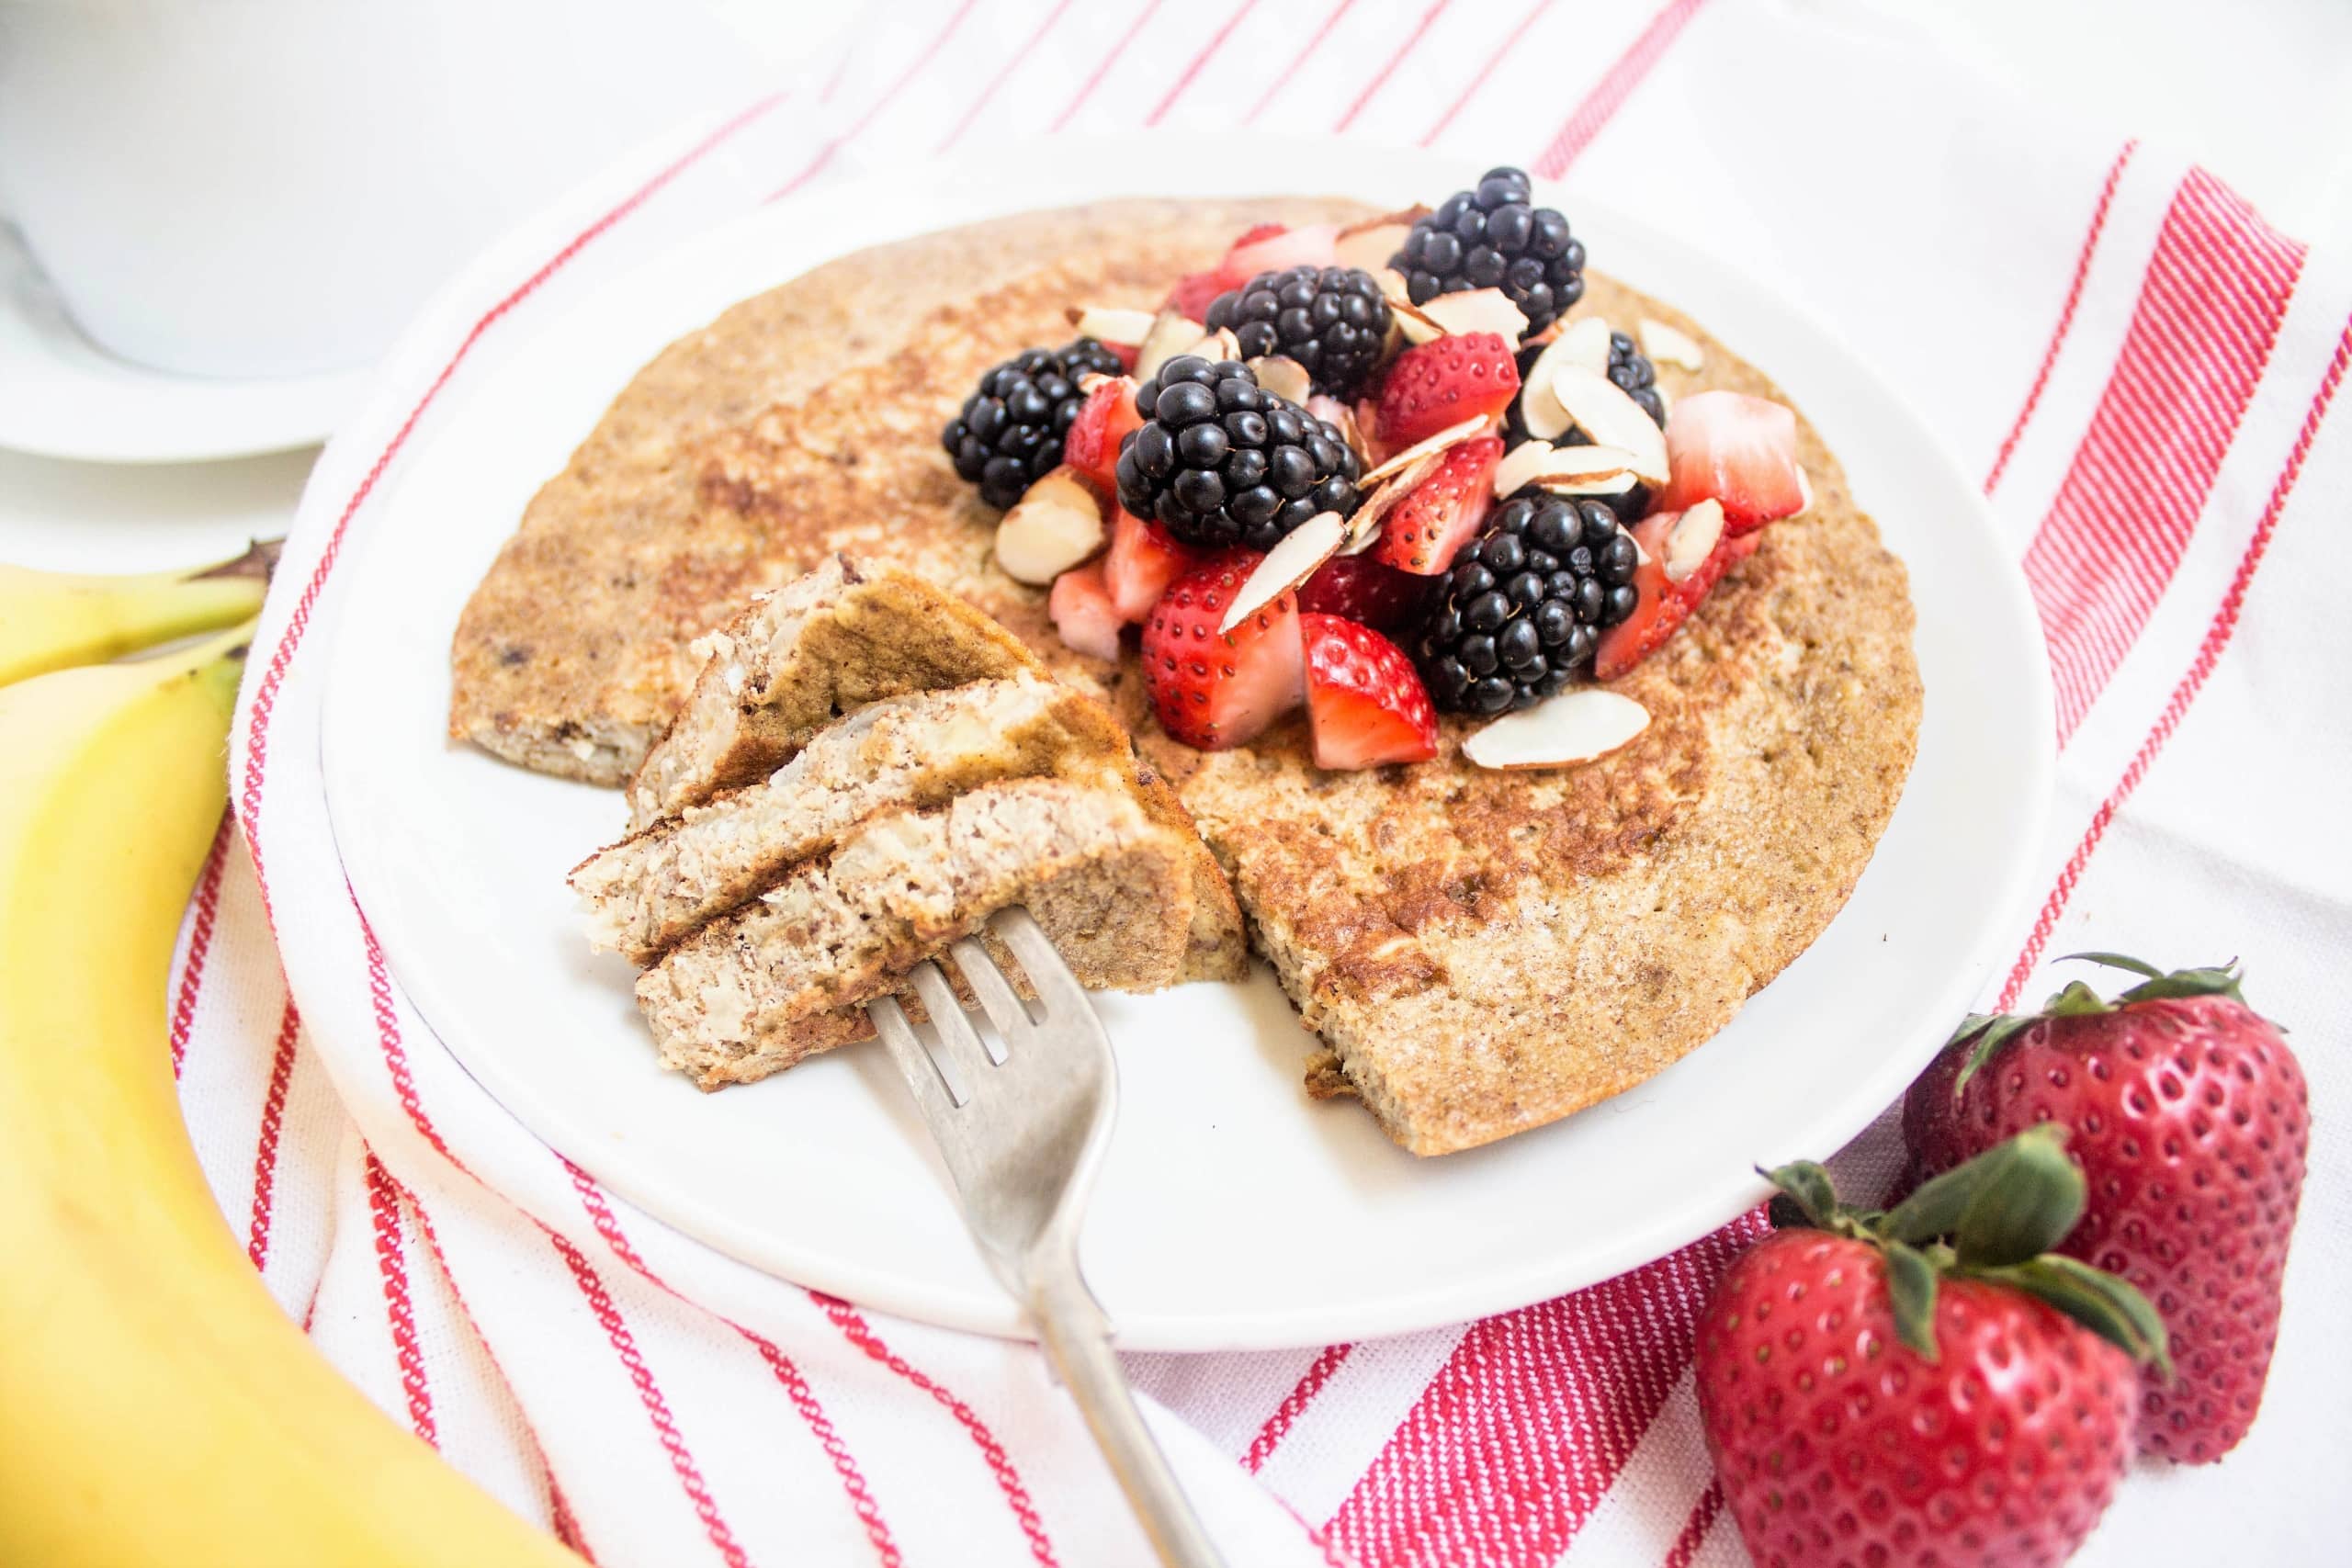 banana egg pancake with berries and almonds